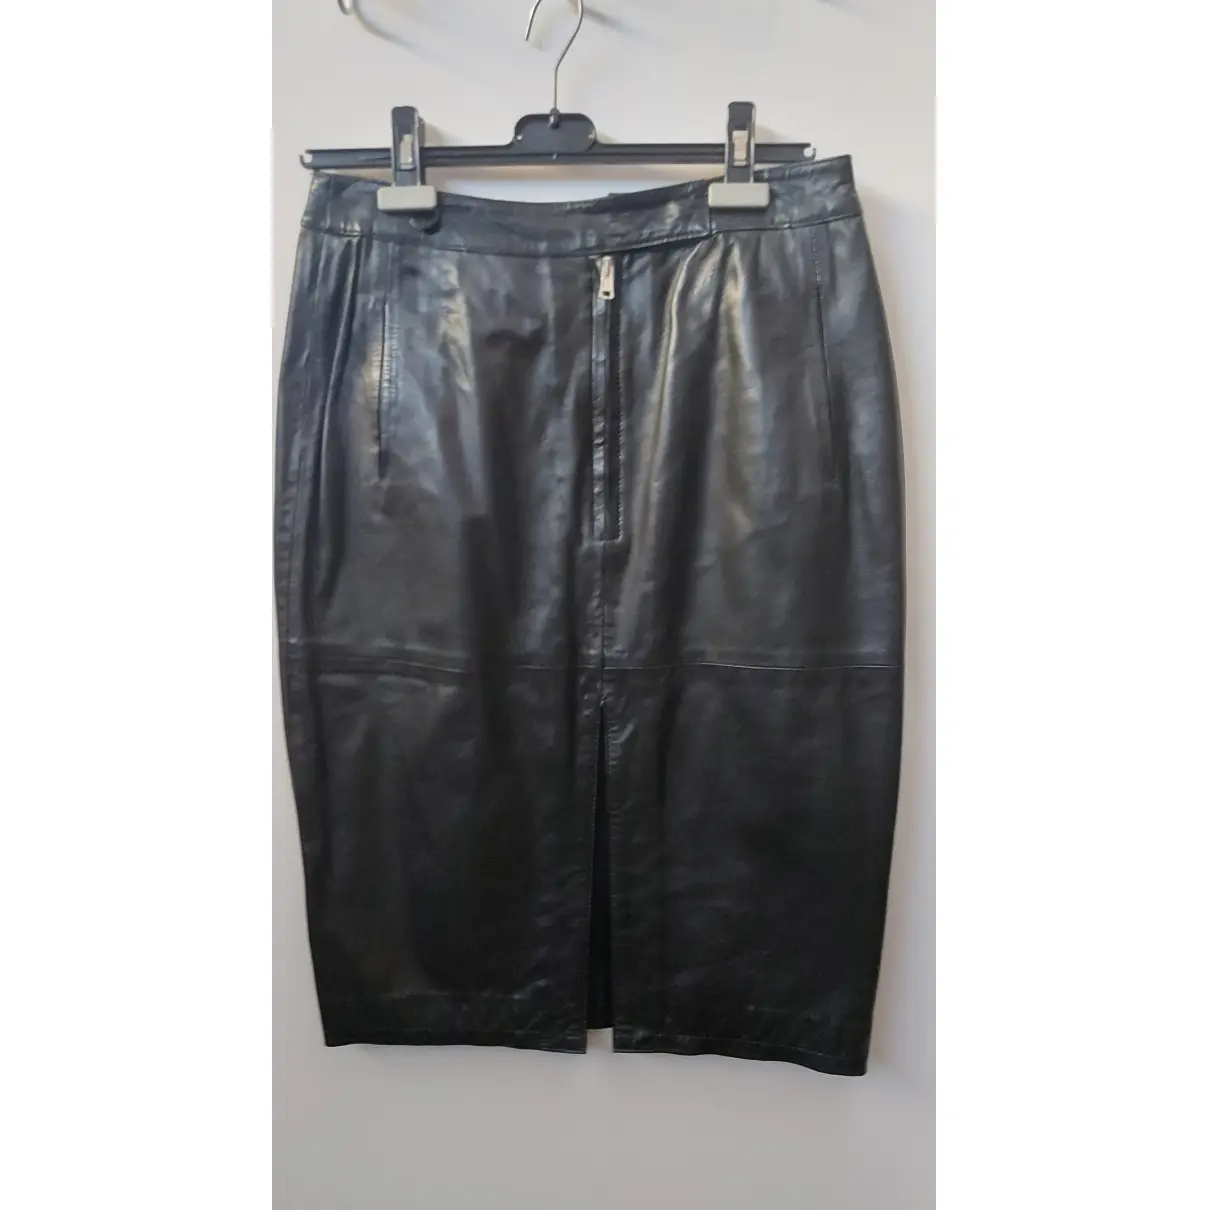 Buy Gianfranco Ferré Leather skirt online